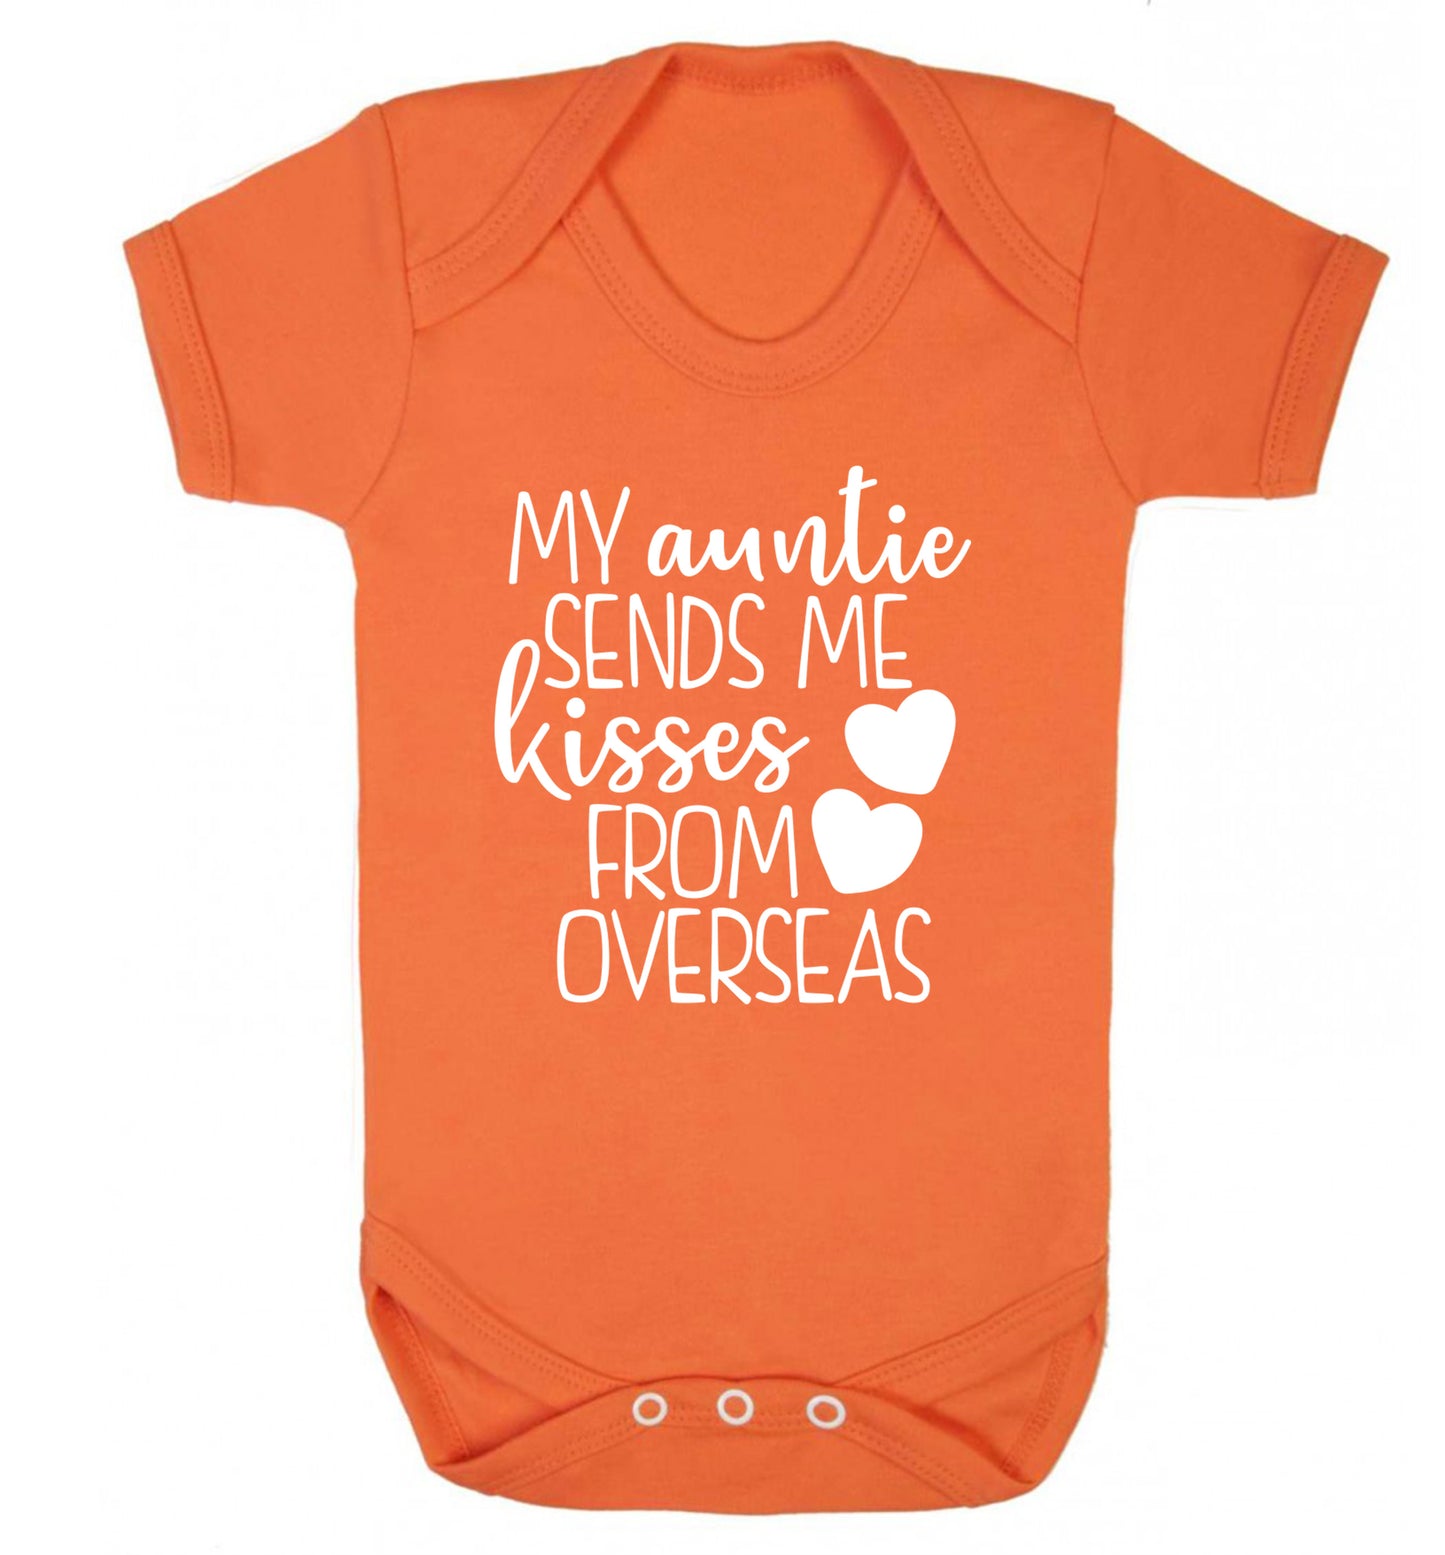 My auntie sends me kisses from overseas Baby Vest orange 18-24 months